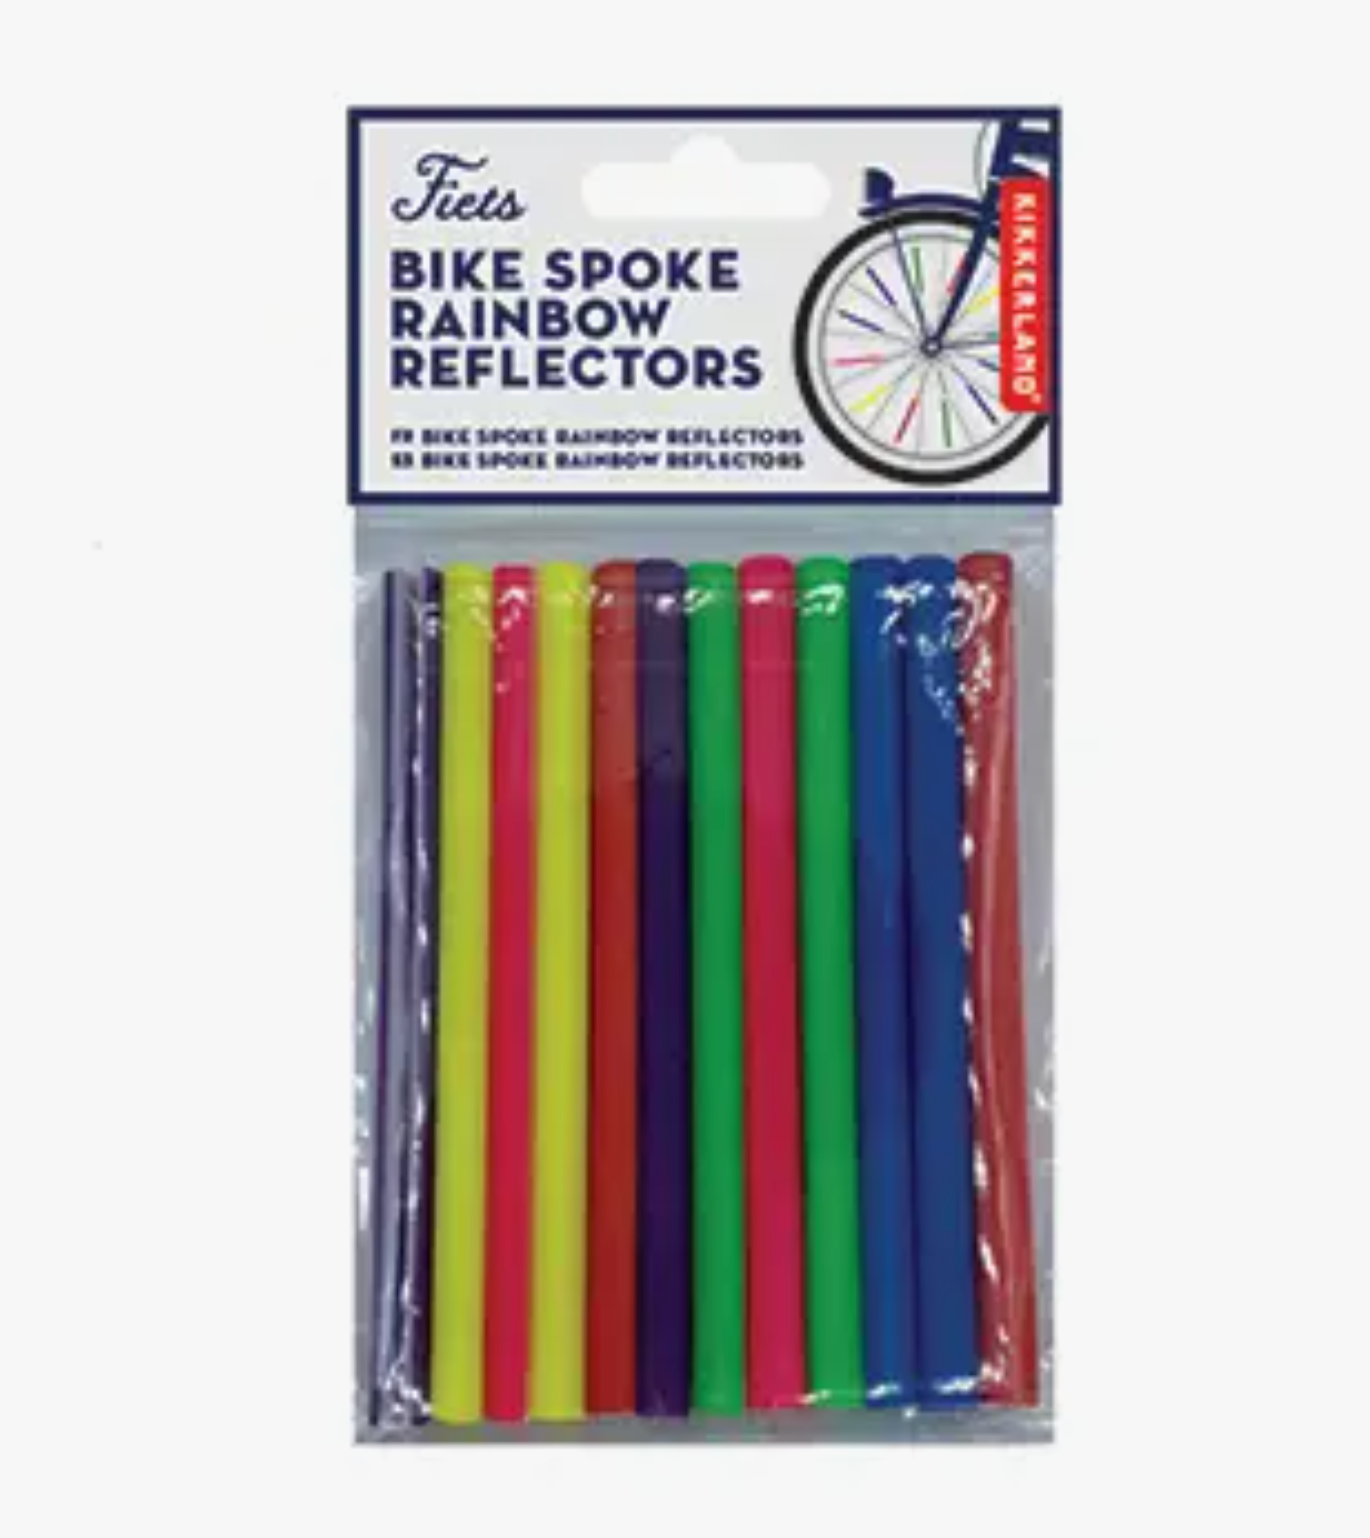 Bike Spoke Rainbow Reflectors